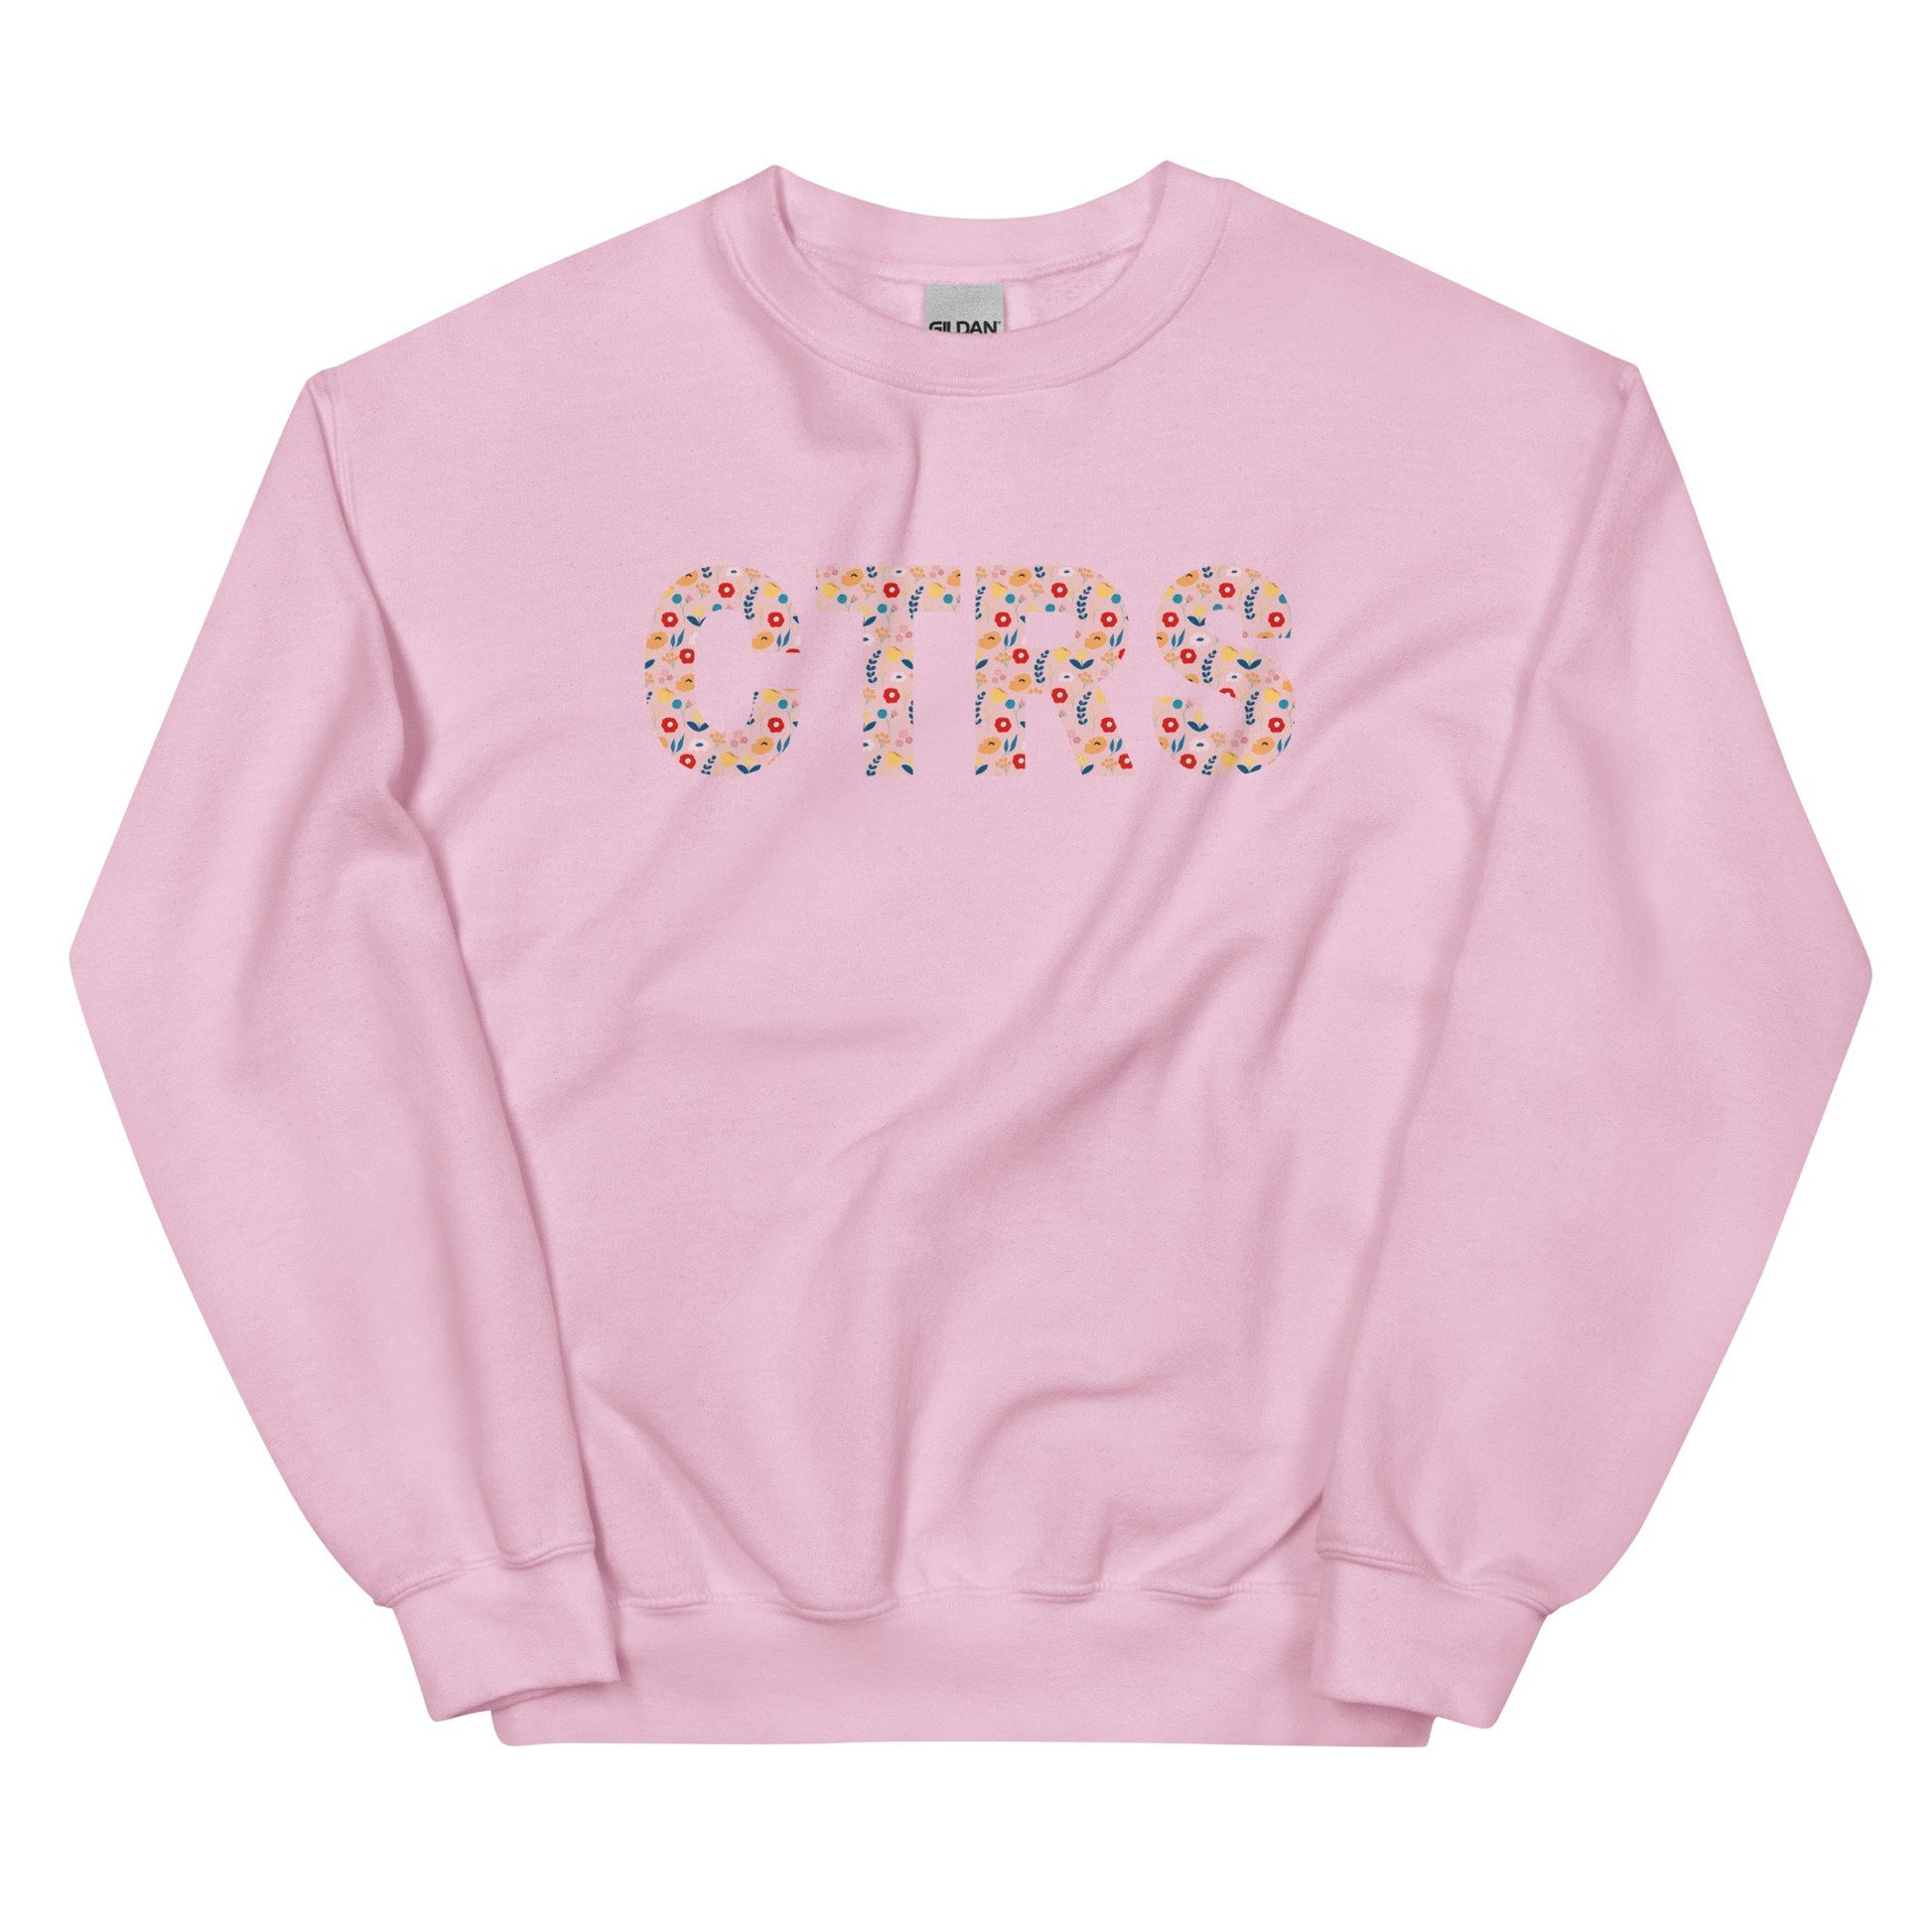 unisex-crew-neck-sweatshirt-light-pink-front-630849bb37c65.jpg